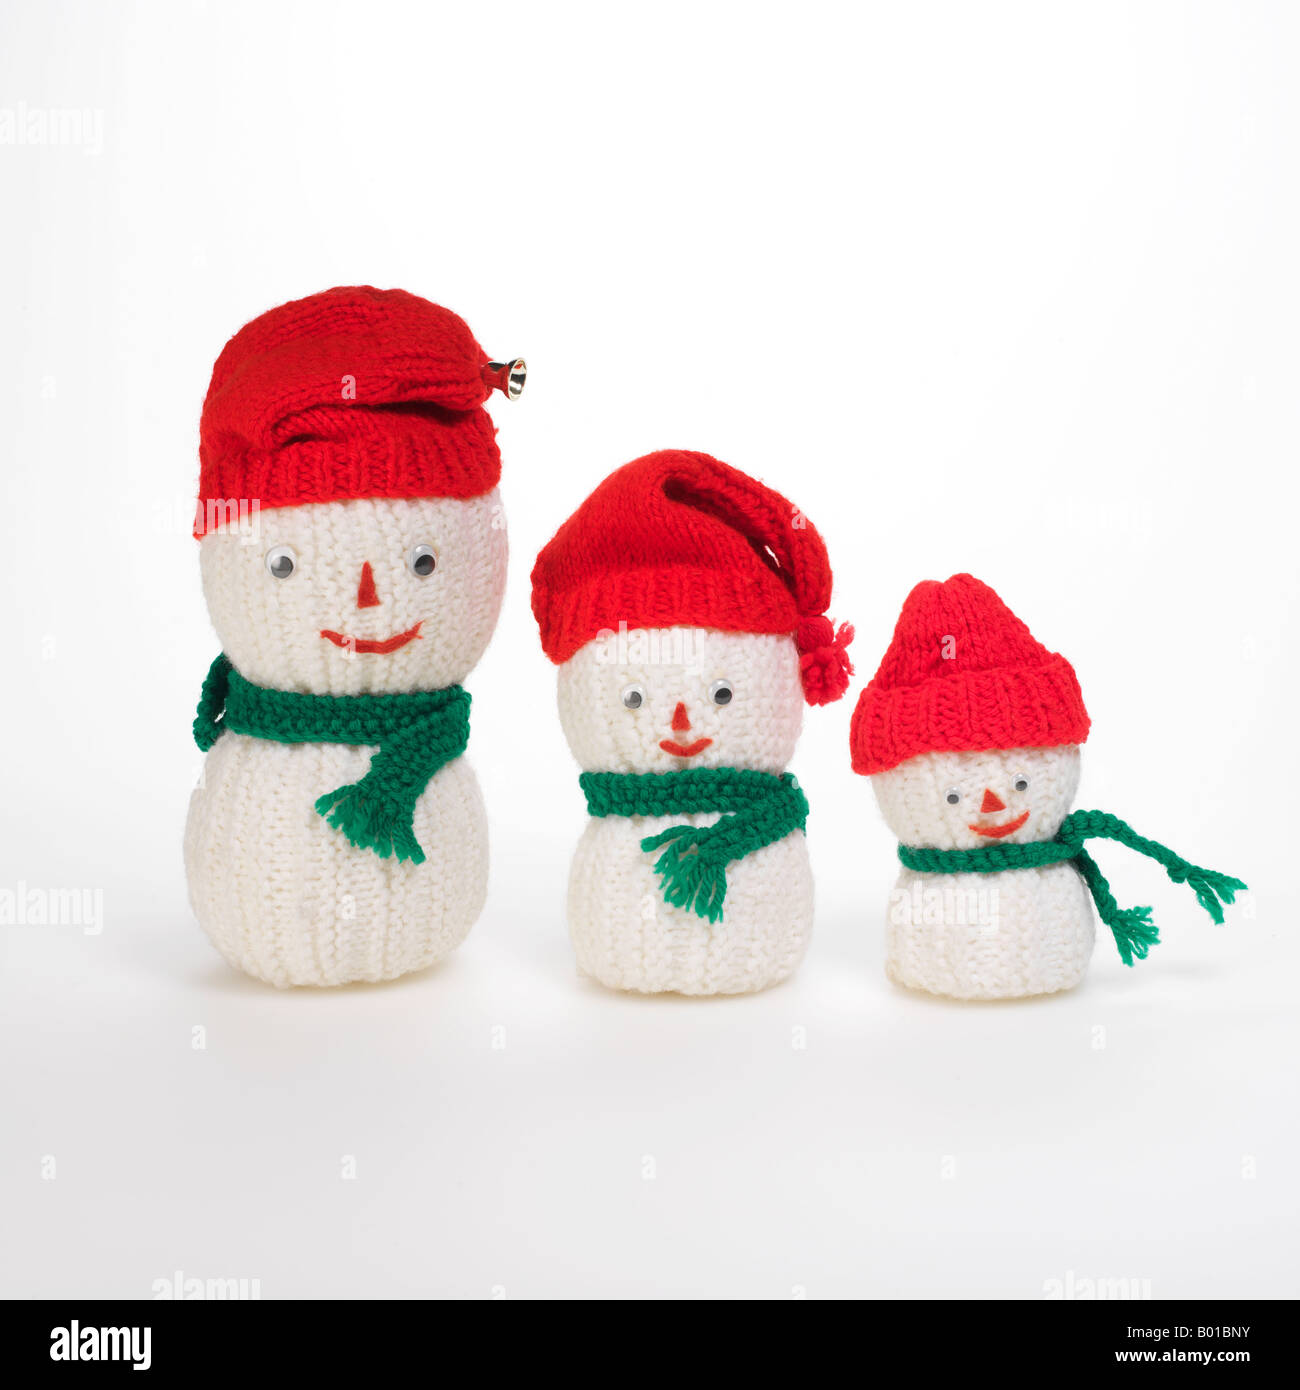 3 knit snowmen family wearing red caps et foulards vert Banque D'Images